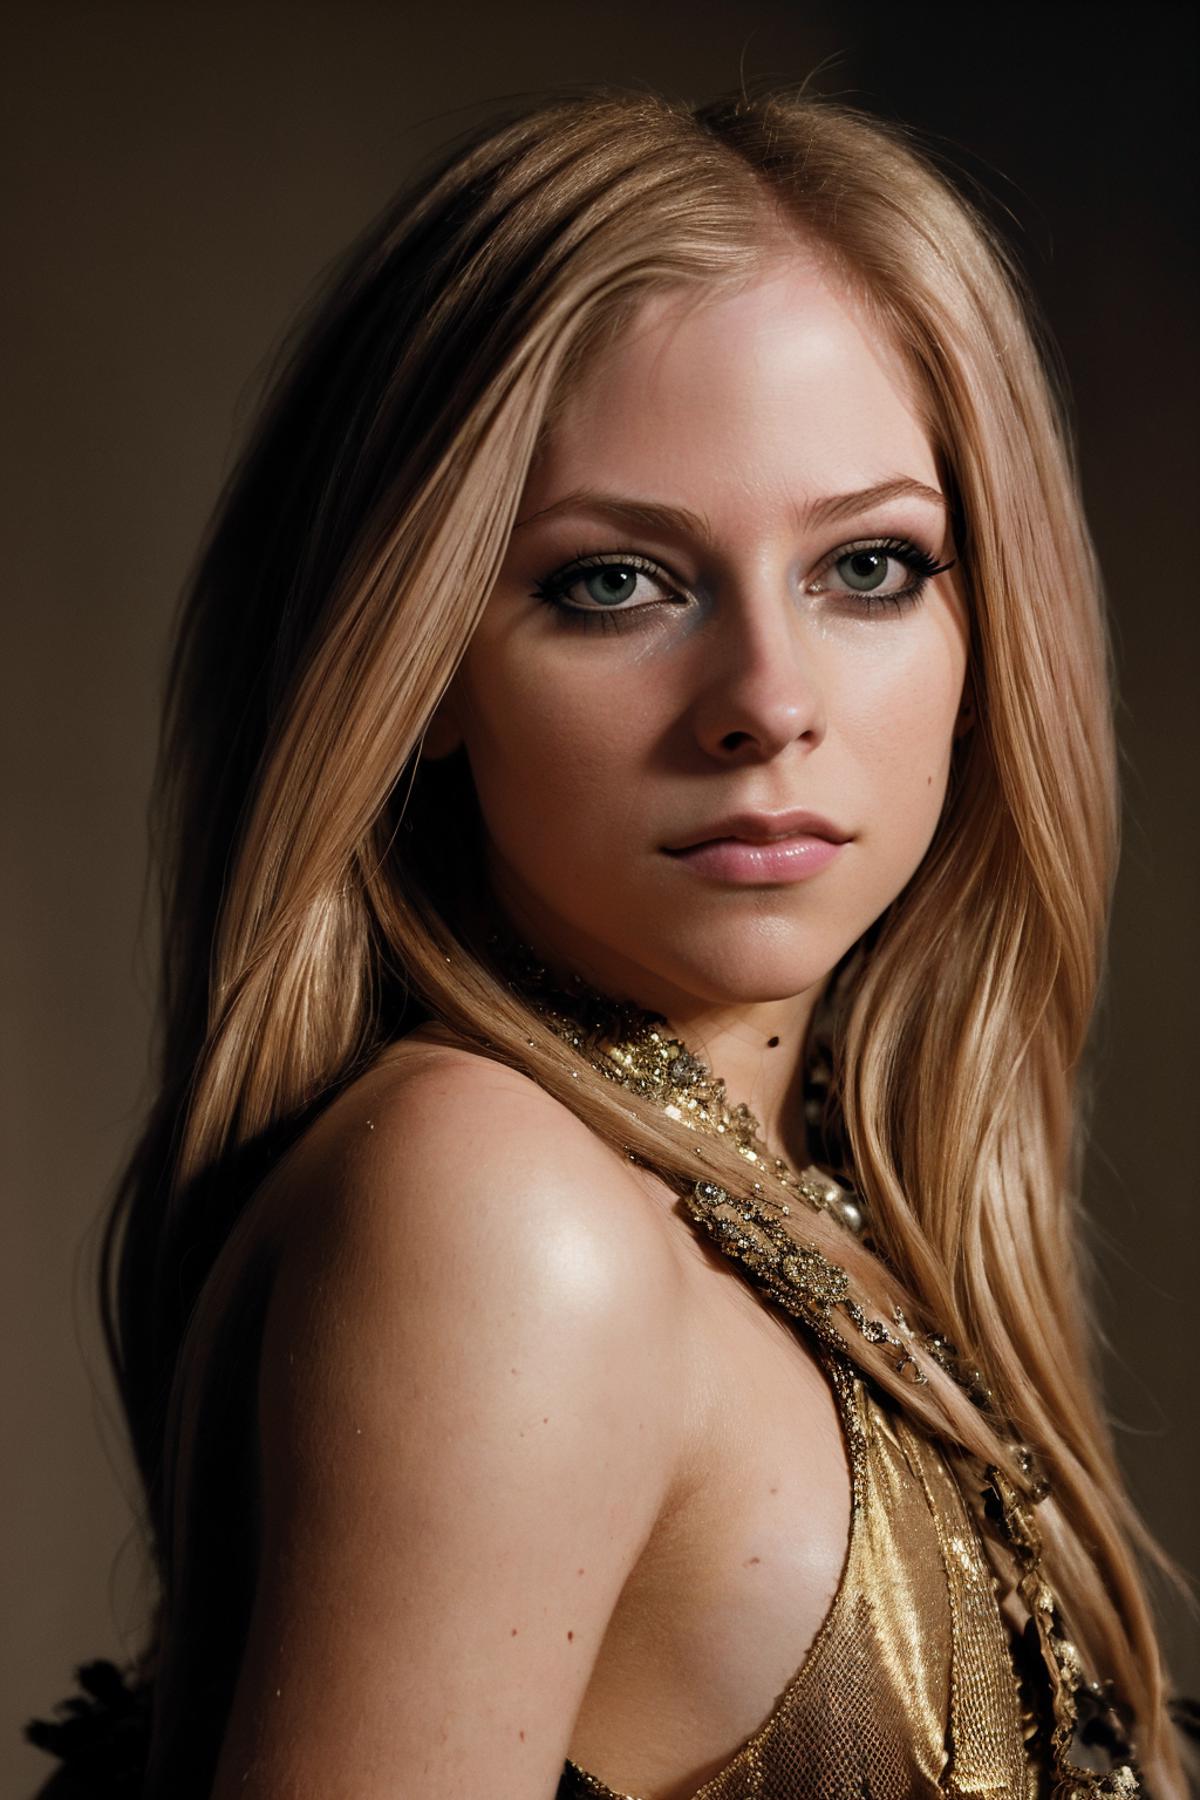 Avril Lavigne - LoRa image by balbrig